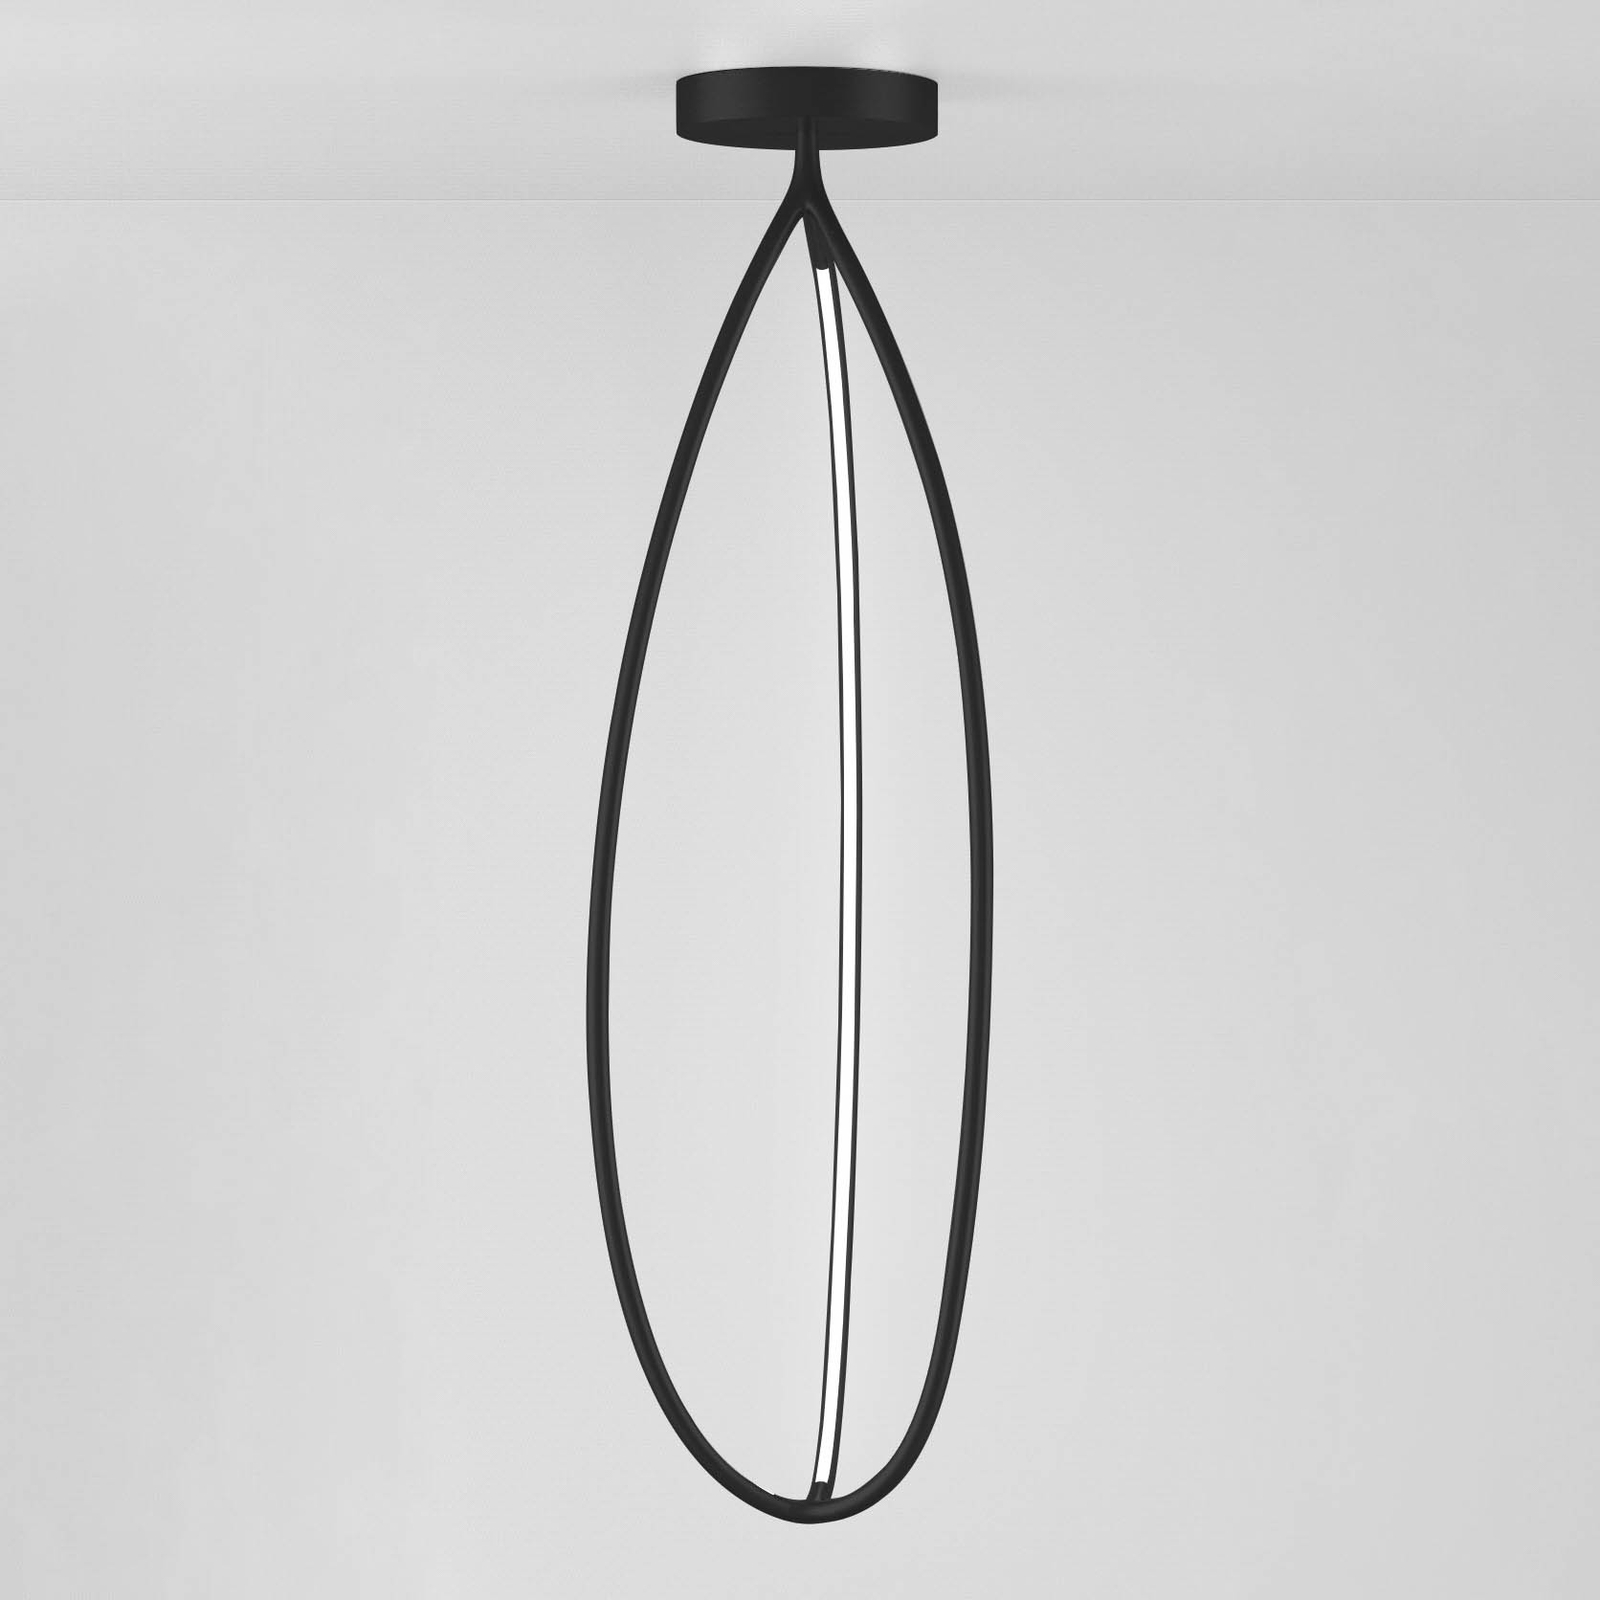 Artemide Arrival ceiling lamp, App, black, 130cm